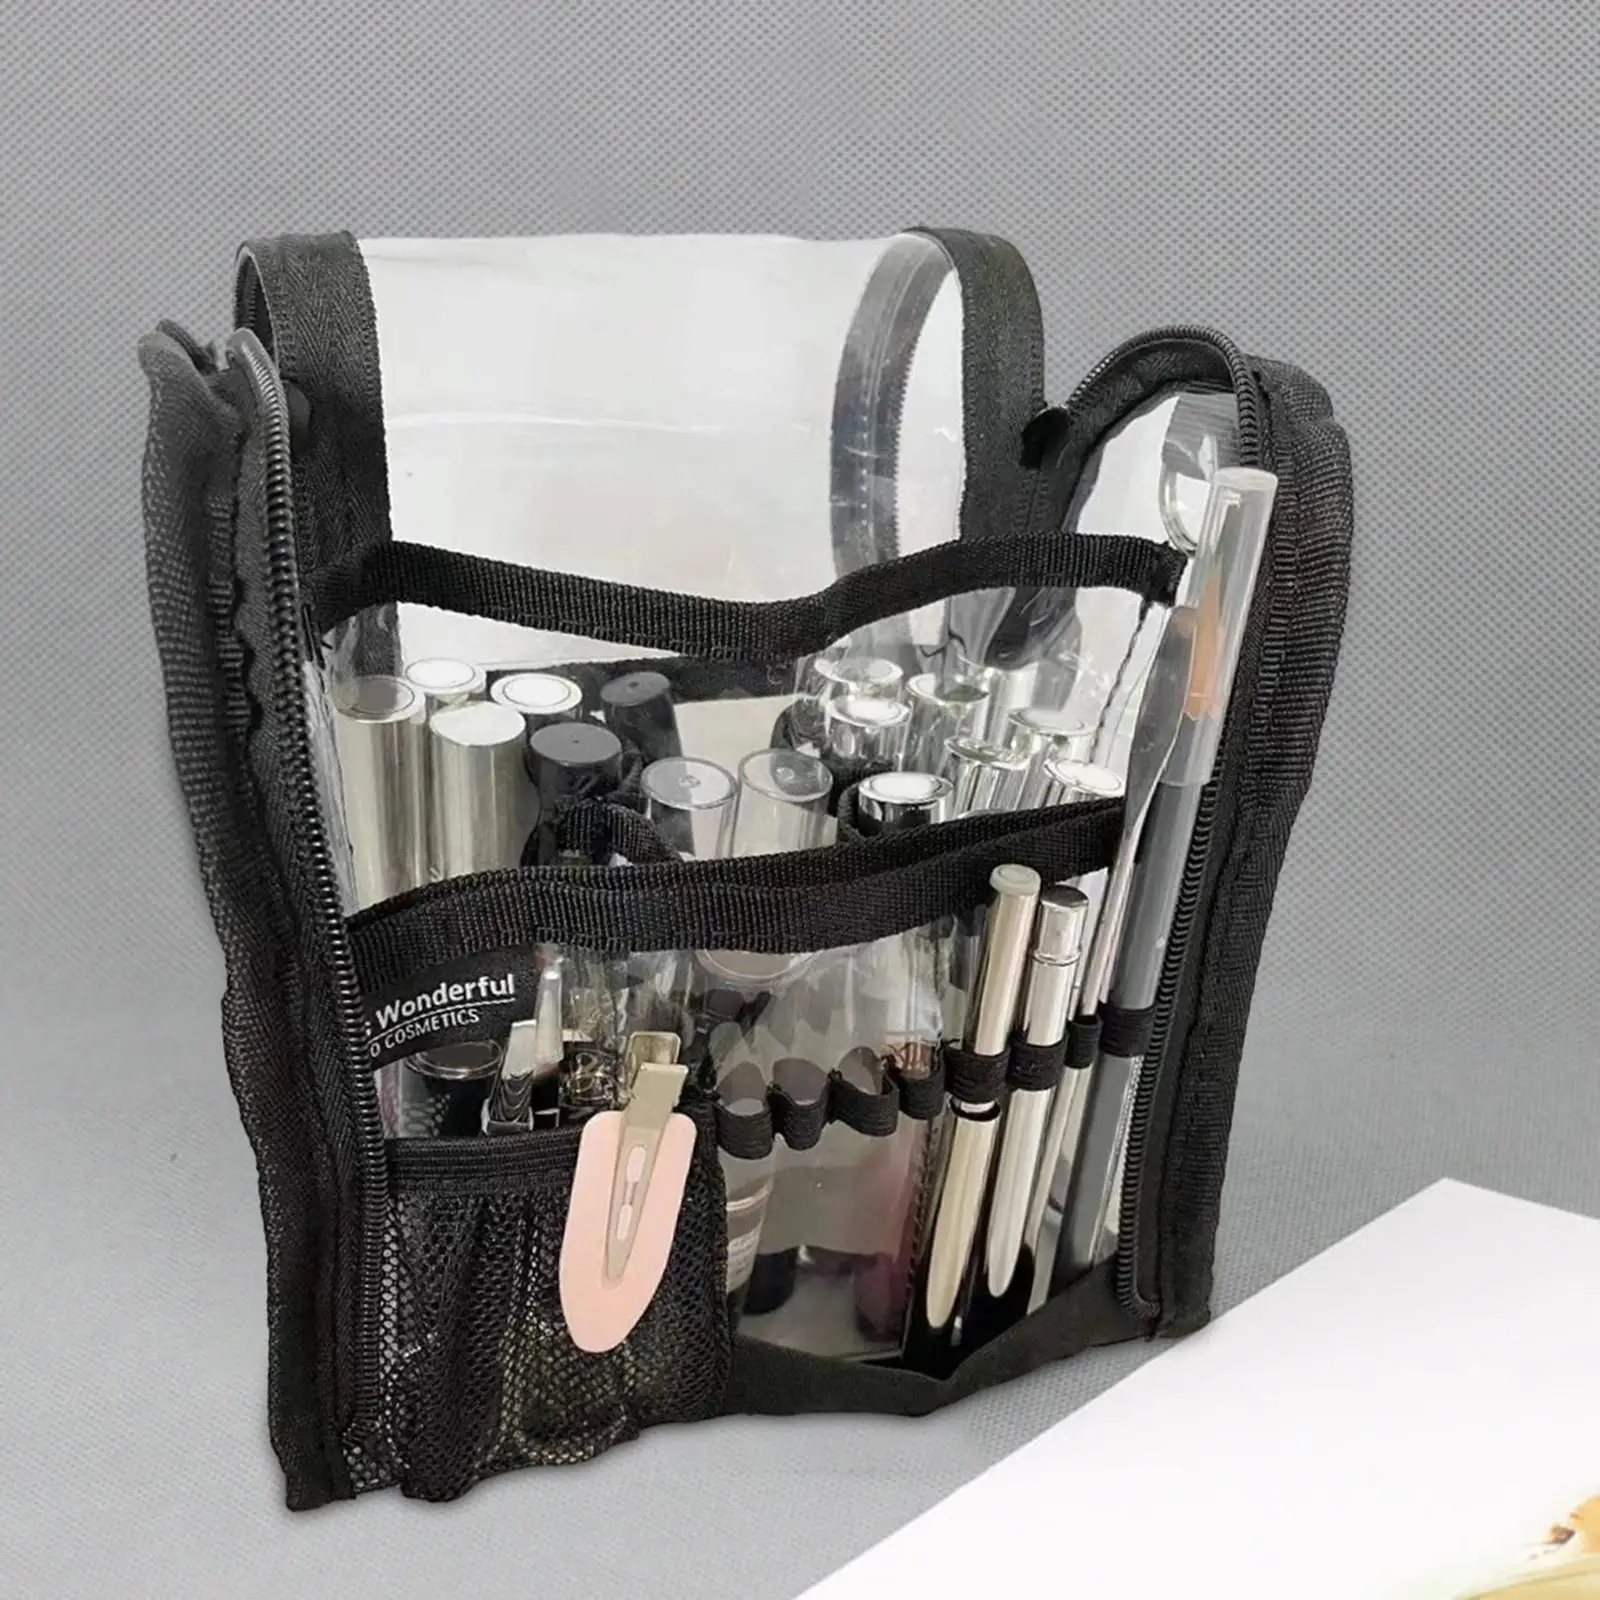 Makeup Artists Bag Make Up Bags Organizer Multipurpose Large Clear Makeup Bag Toiletries Makeup Case for Camping Home